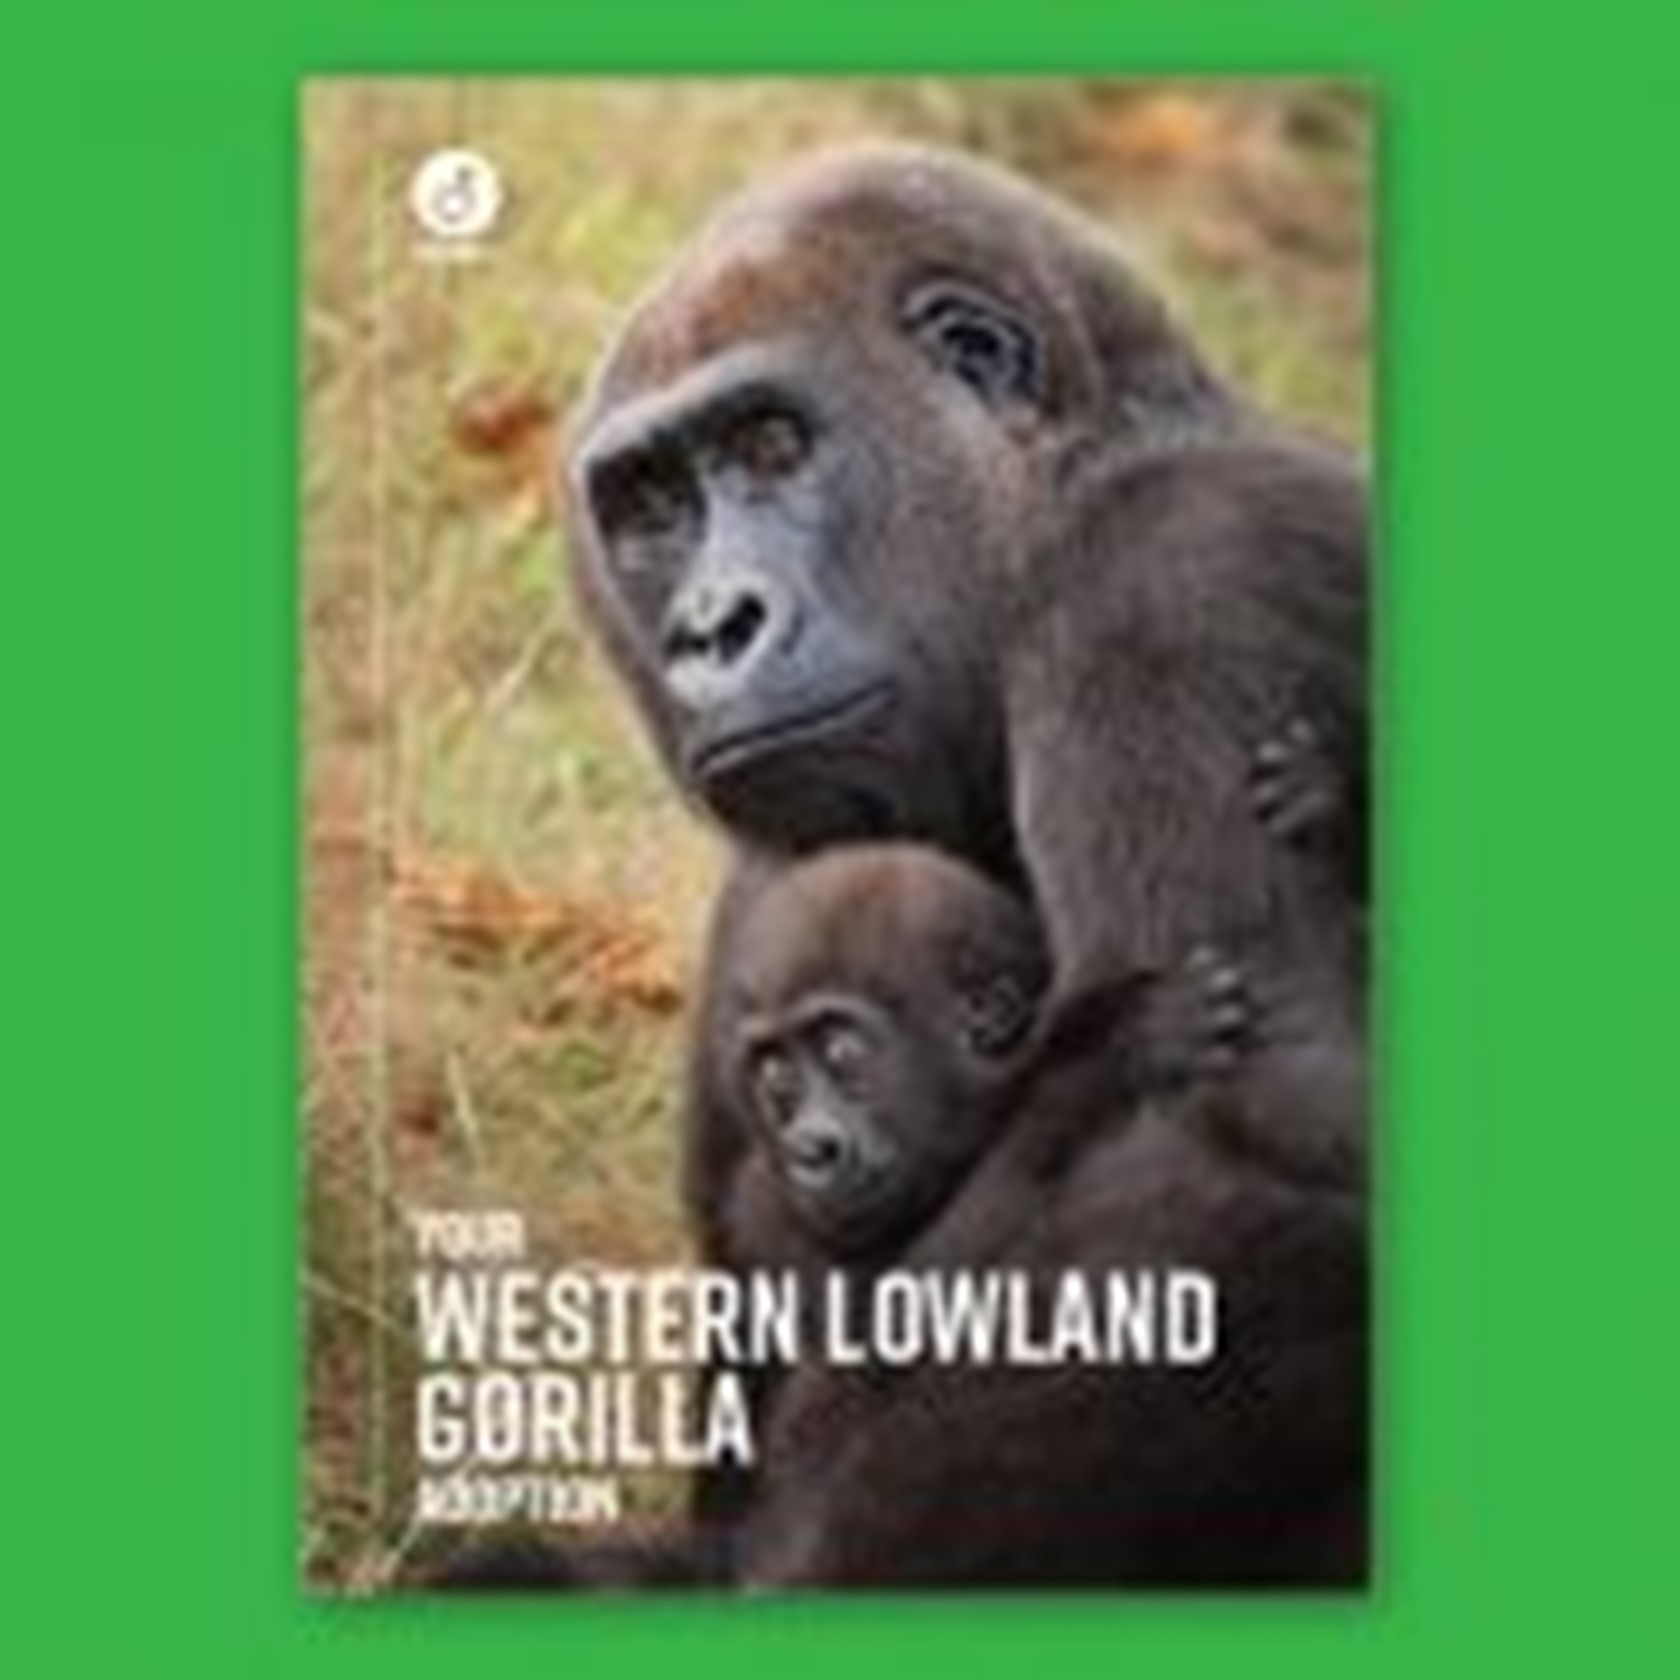 Digital Adoption - Western lowland gorillas